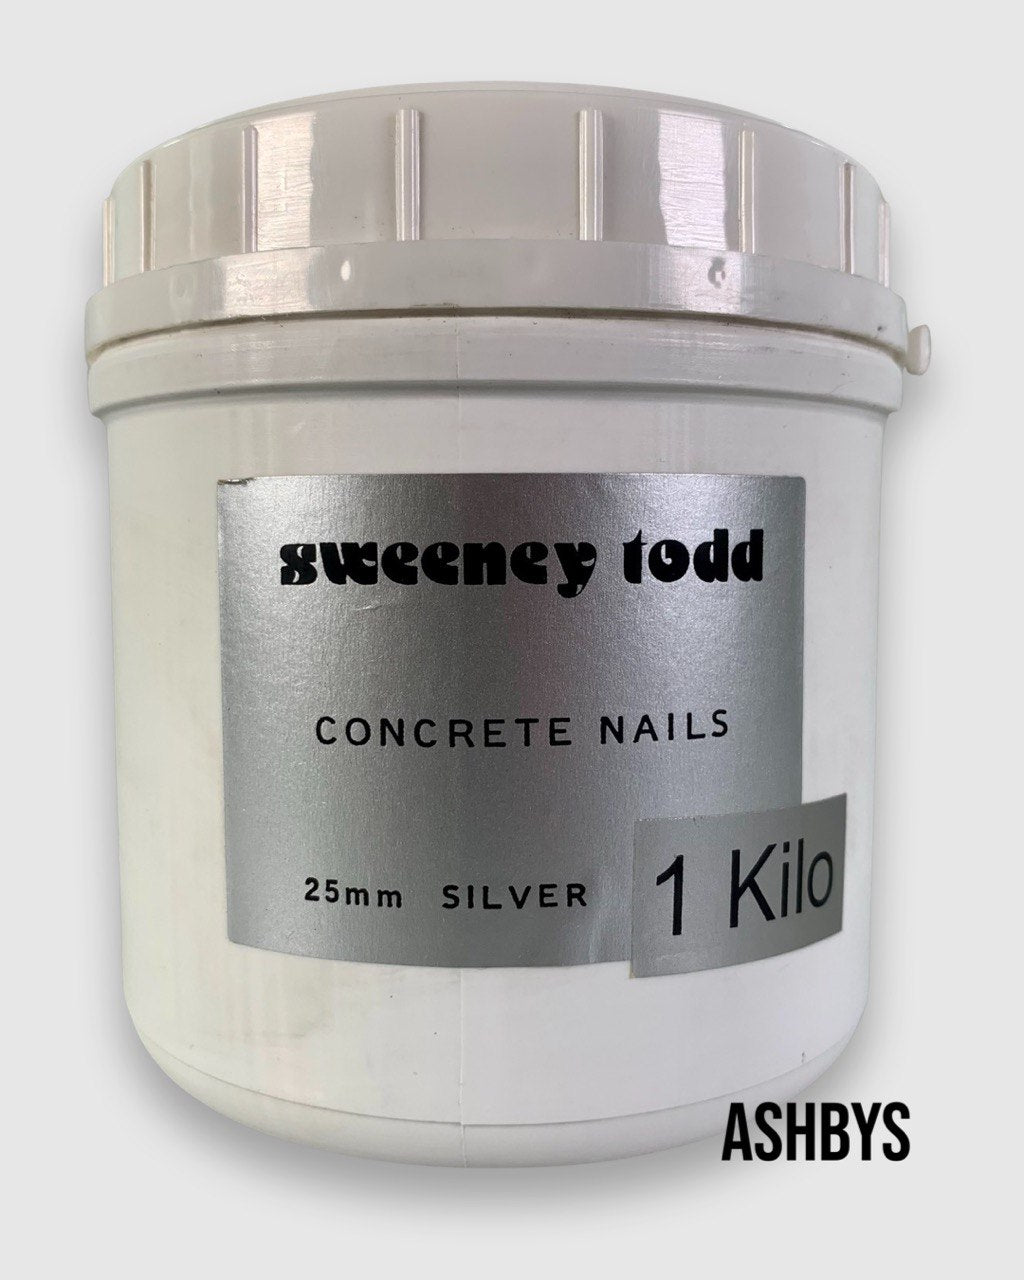 Sweeney Todd Concrete Nails 25mm Silver - 1 Kilo (NEW UNUSED OLD STOCK)